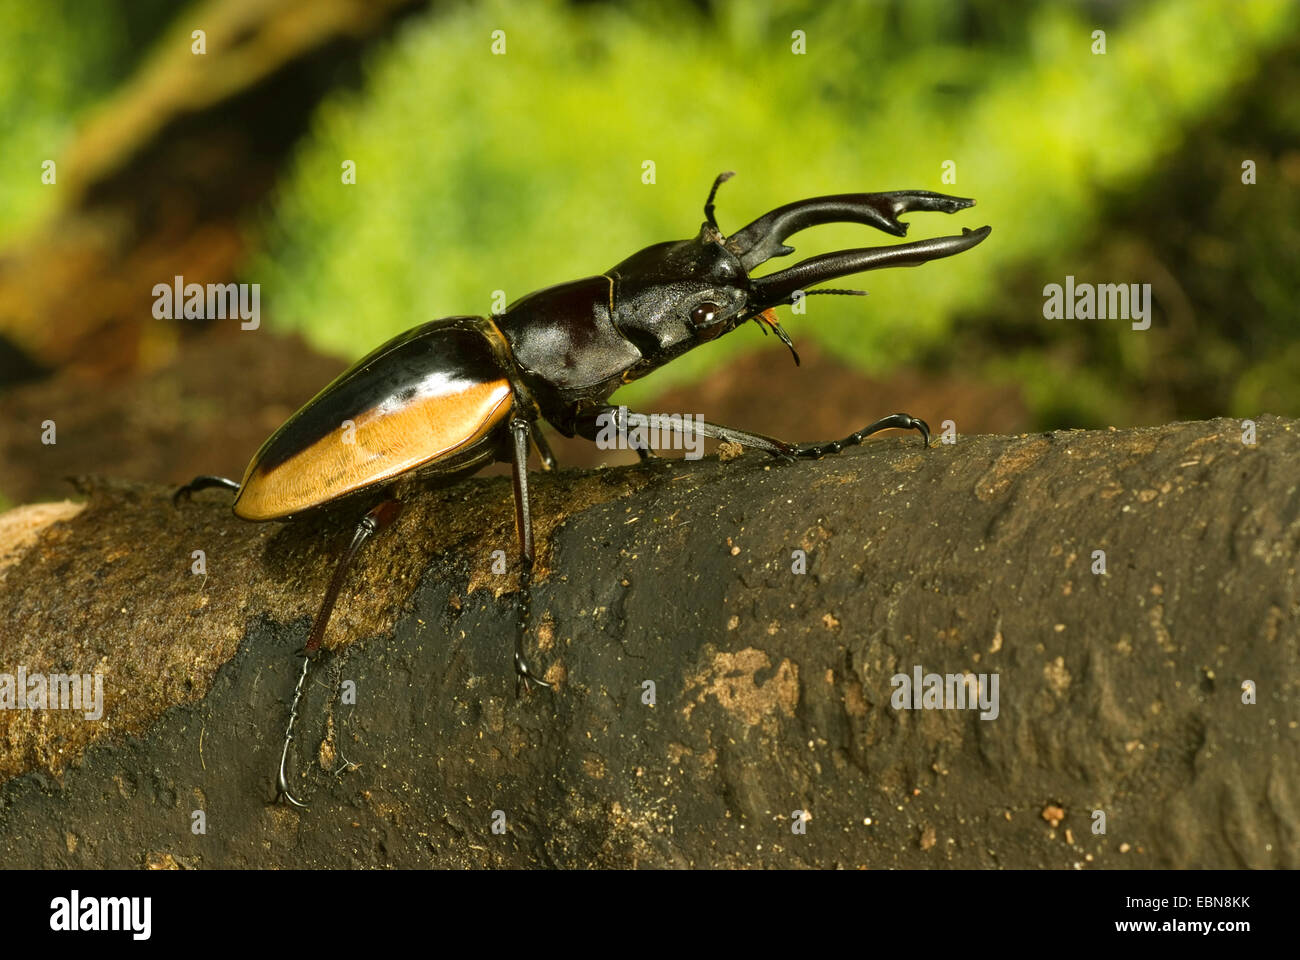 Stag Beetle; Odontolabis cuvera sinensis (Odontolabis cuvera sinensis), male, close-up view Stock Photo